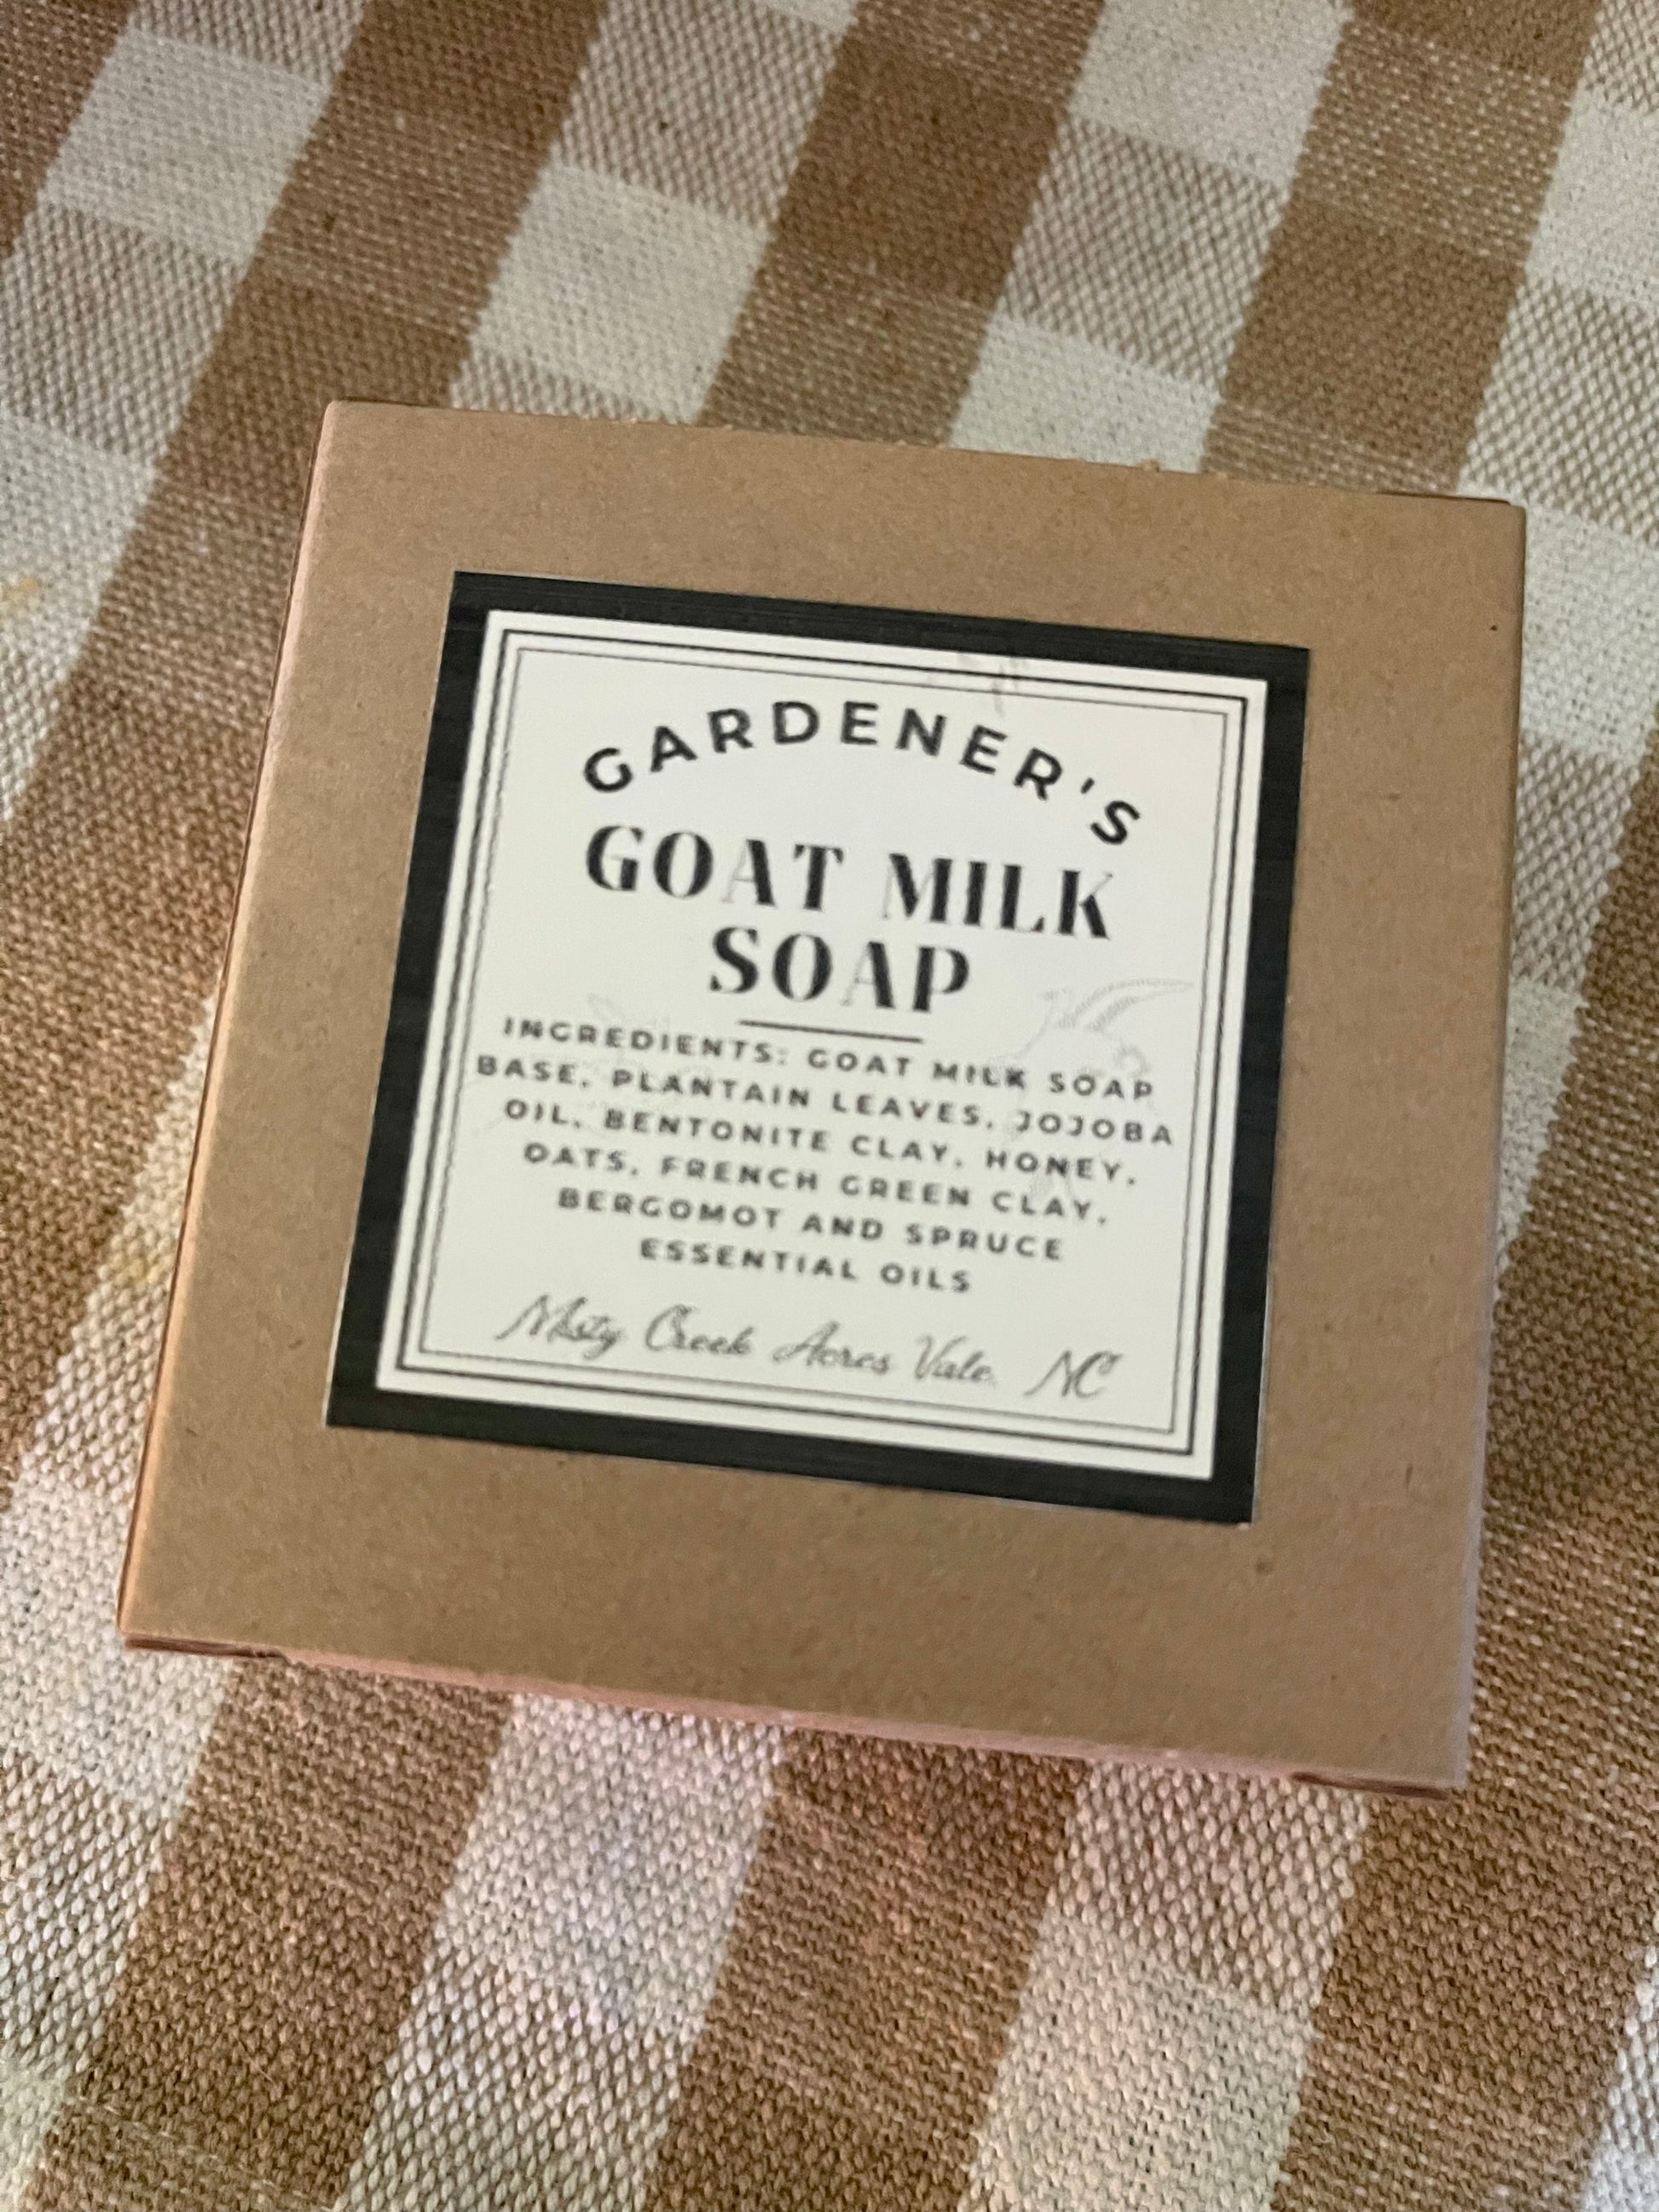 Gardener's Goat Milk Soap, Homemade goat milk soap, goat milk soap, North Carolina homemade goat milk soap, Natural soap, Non-toxic soap, North Carolina farm products